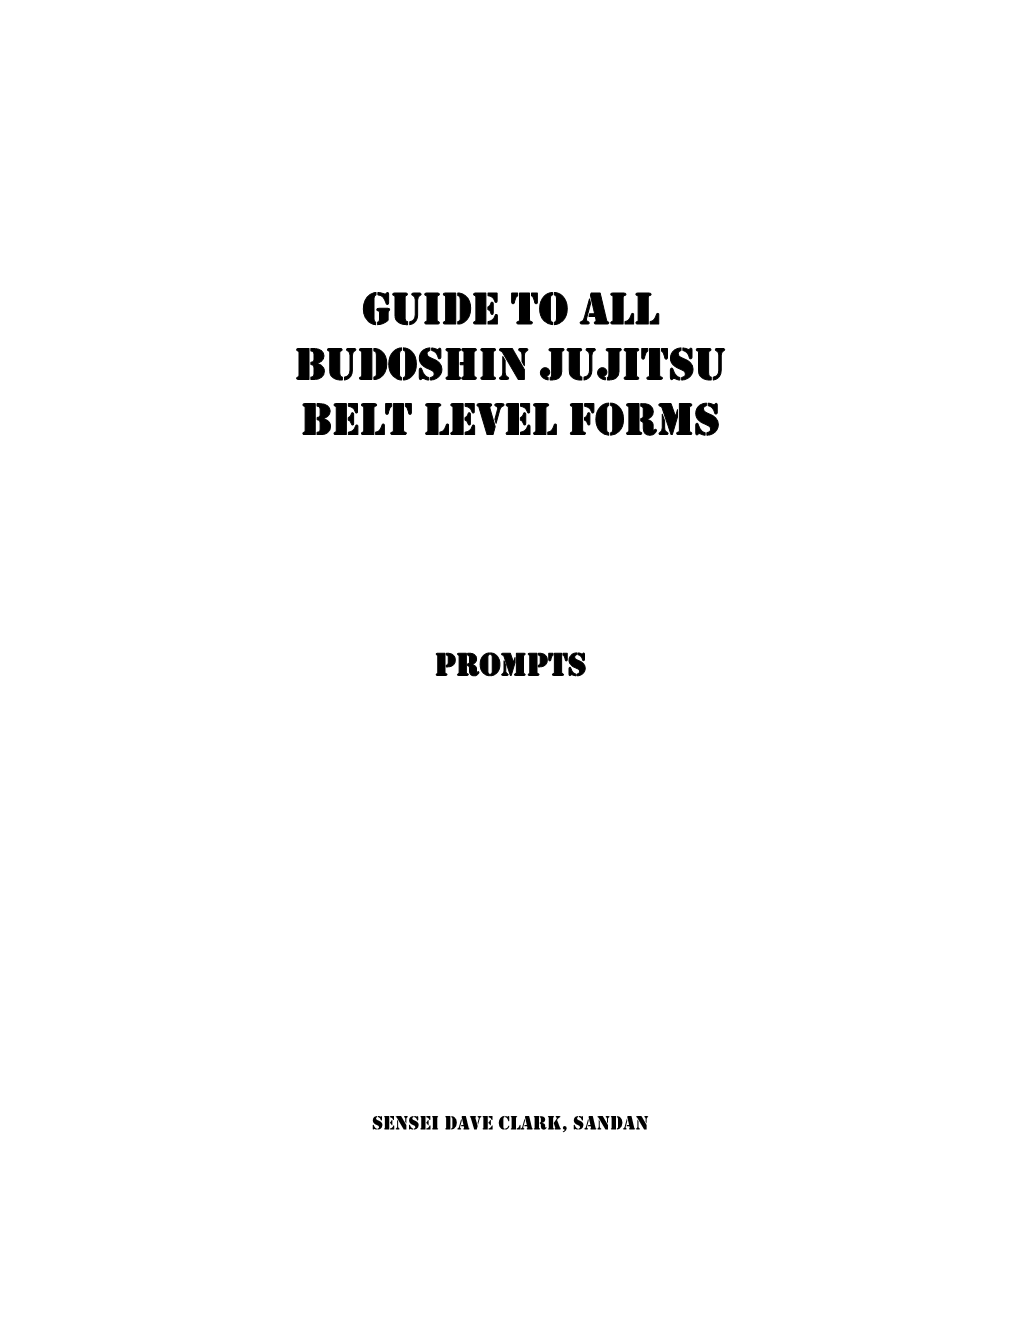 Guide to All Budoshin Jujitsu Belt Level Forms